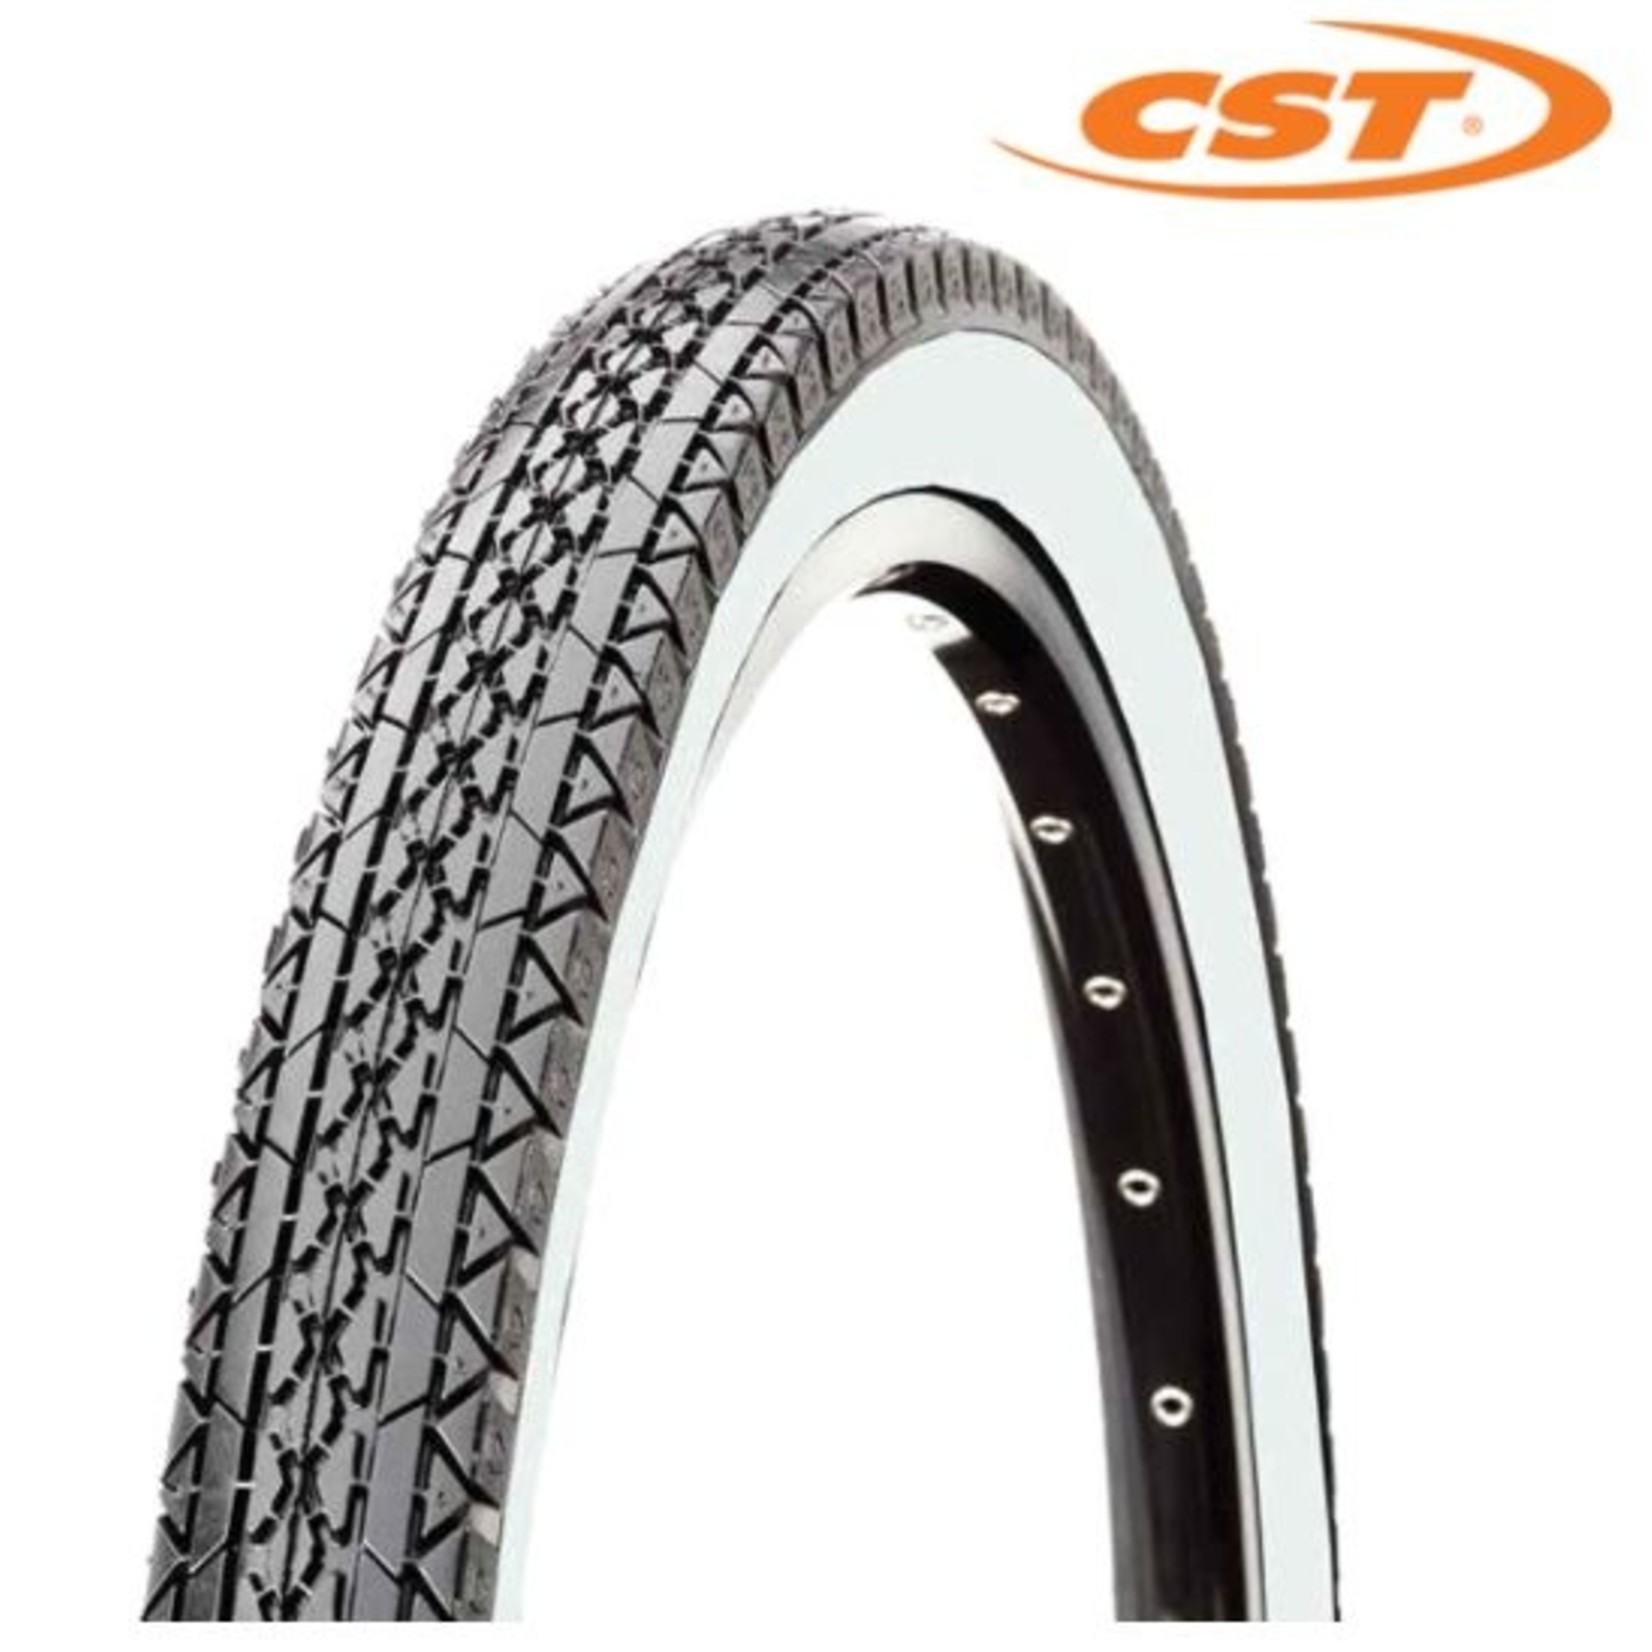 CST CST Bike Tyre - 26 X 2.125 White Wall Cruiser Tread - Pair Black